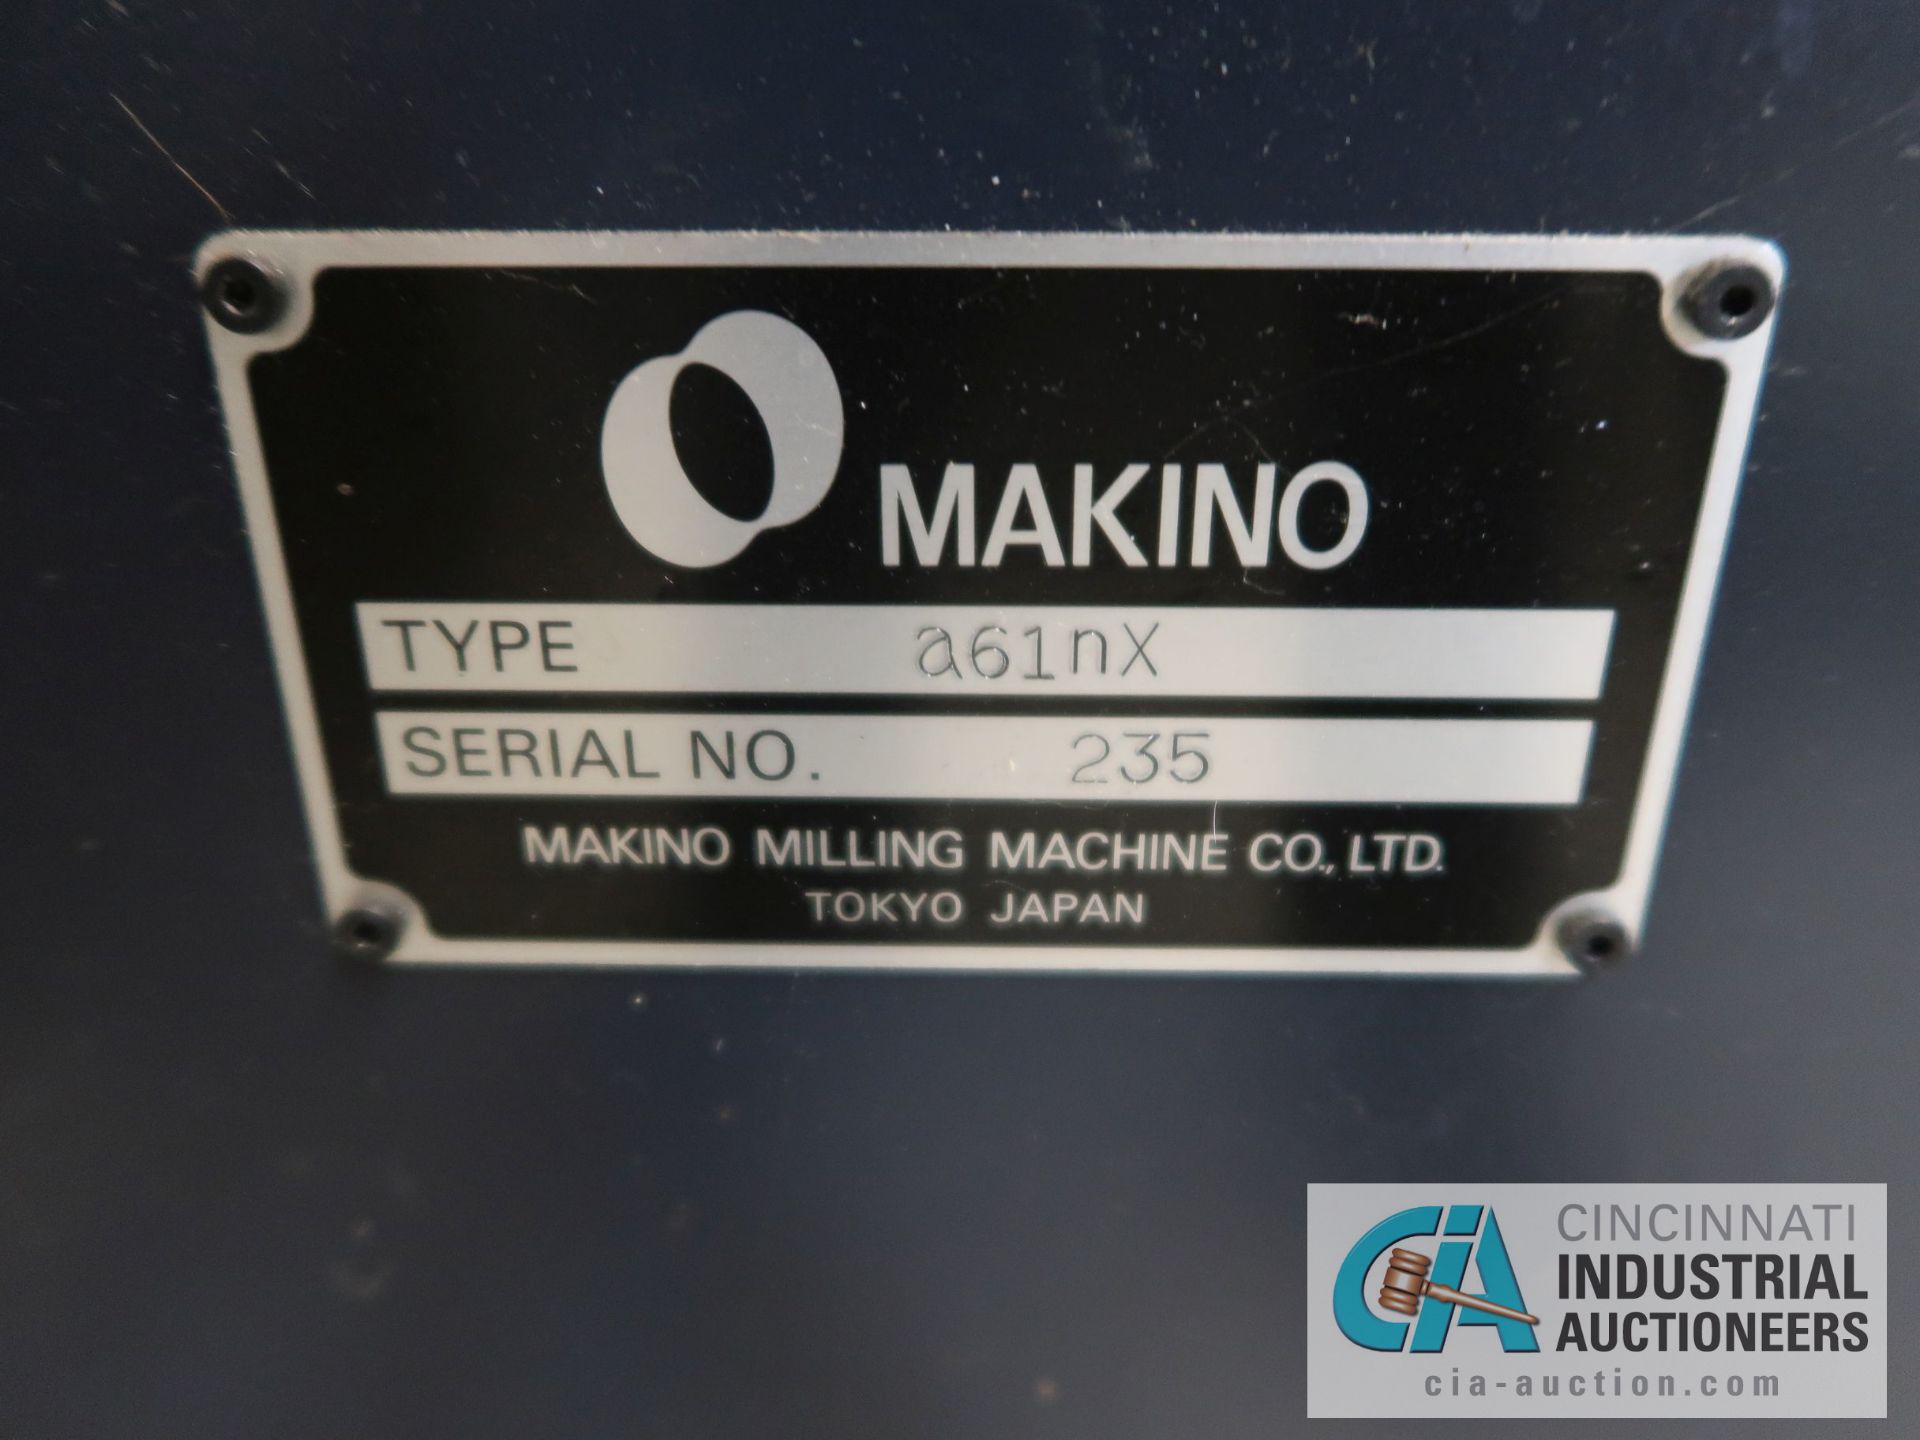 MAKINO MODEL A61NX CNC HORIZONTAL MACHINING CENTER W/ FULL 4TH AXIS; S/N 235 - Image 12 of 13